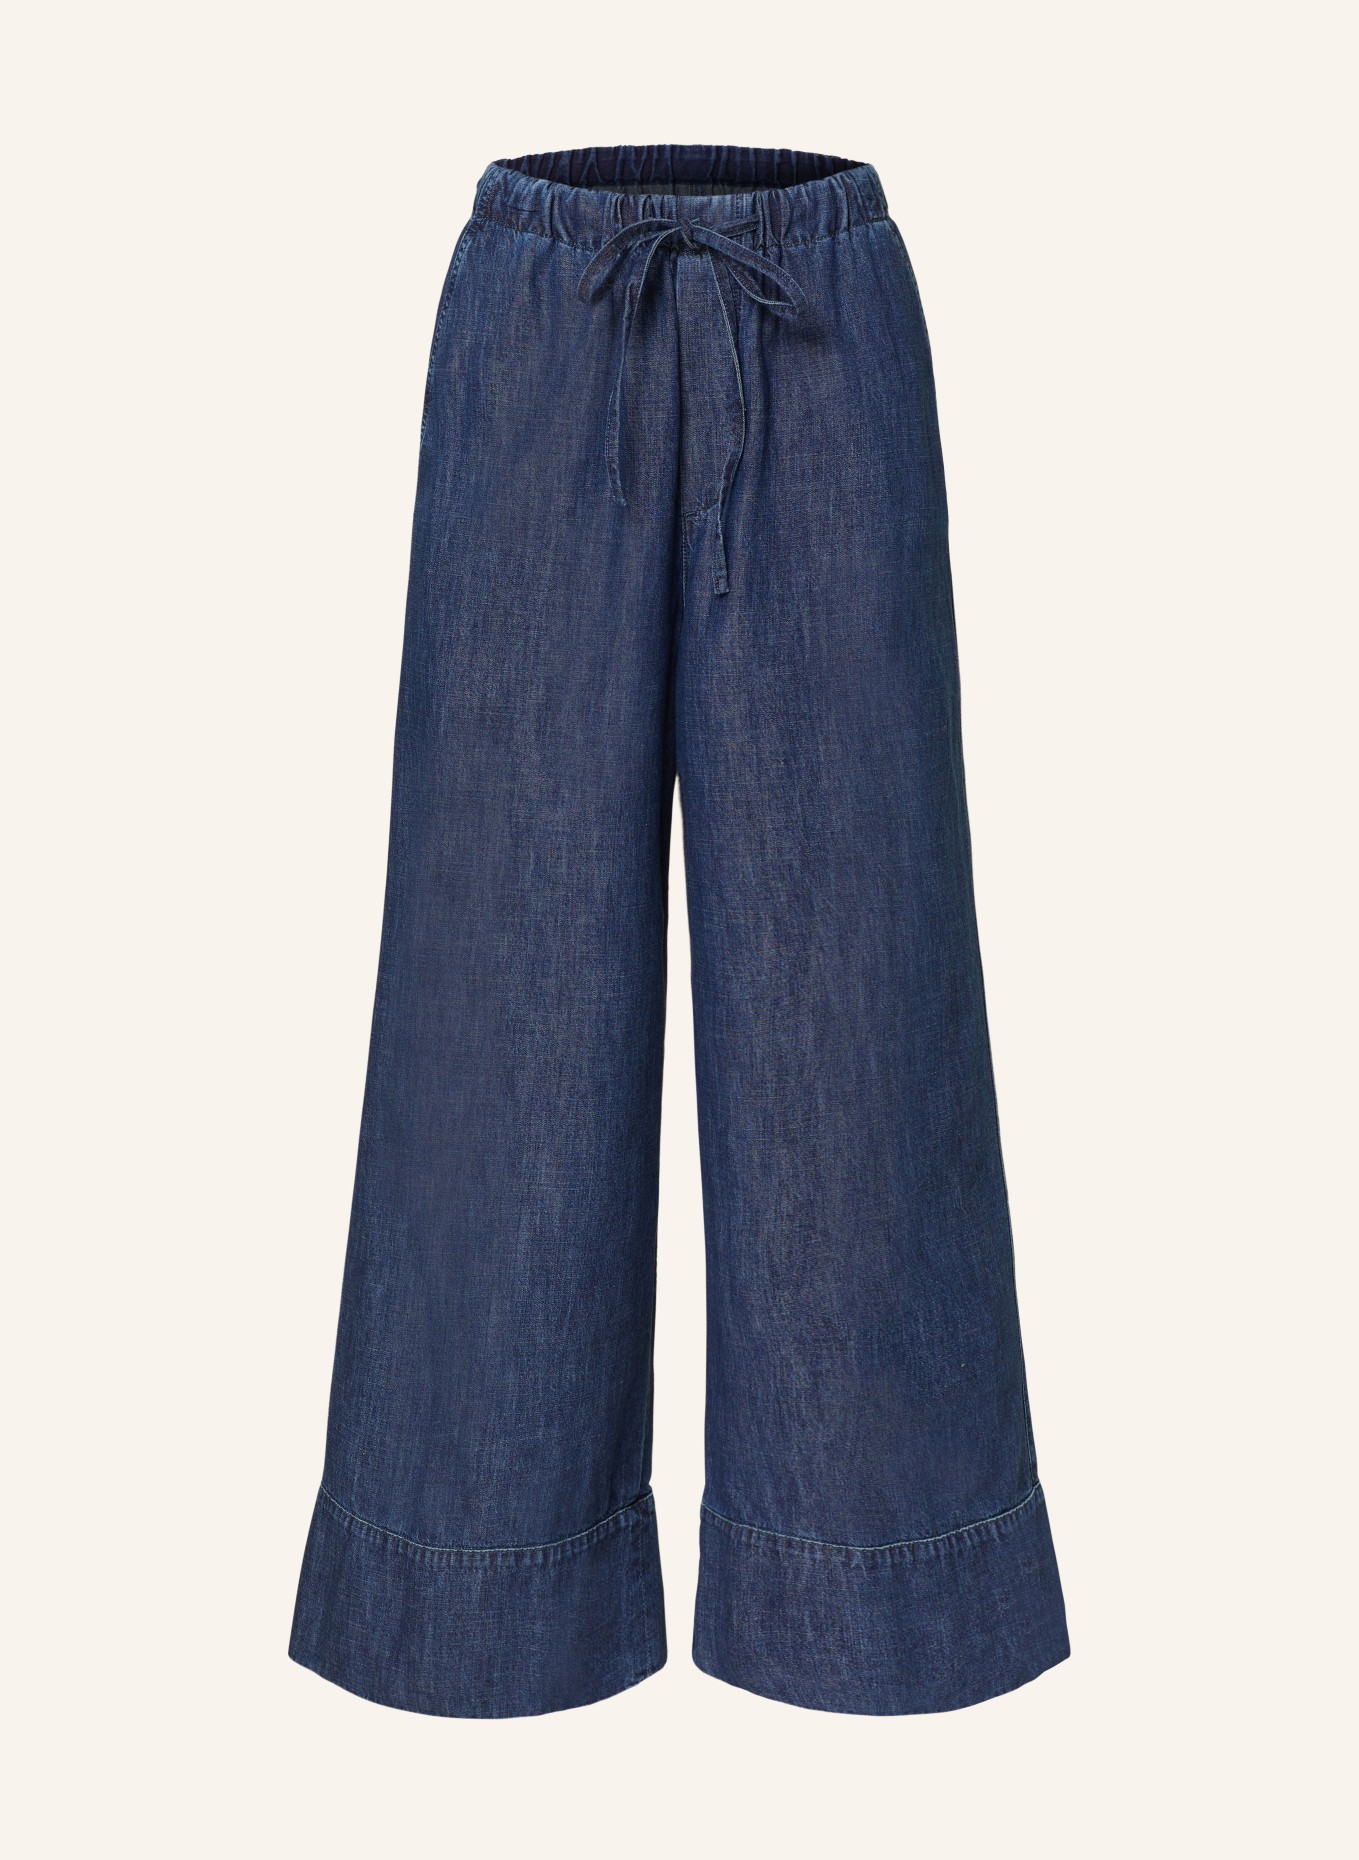 VALENTINO Flared Jeans, Farbe: 558 MEDIUM BLUE DENIM (Bild 1)